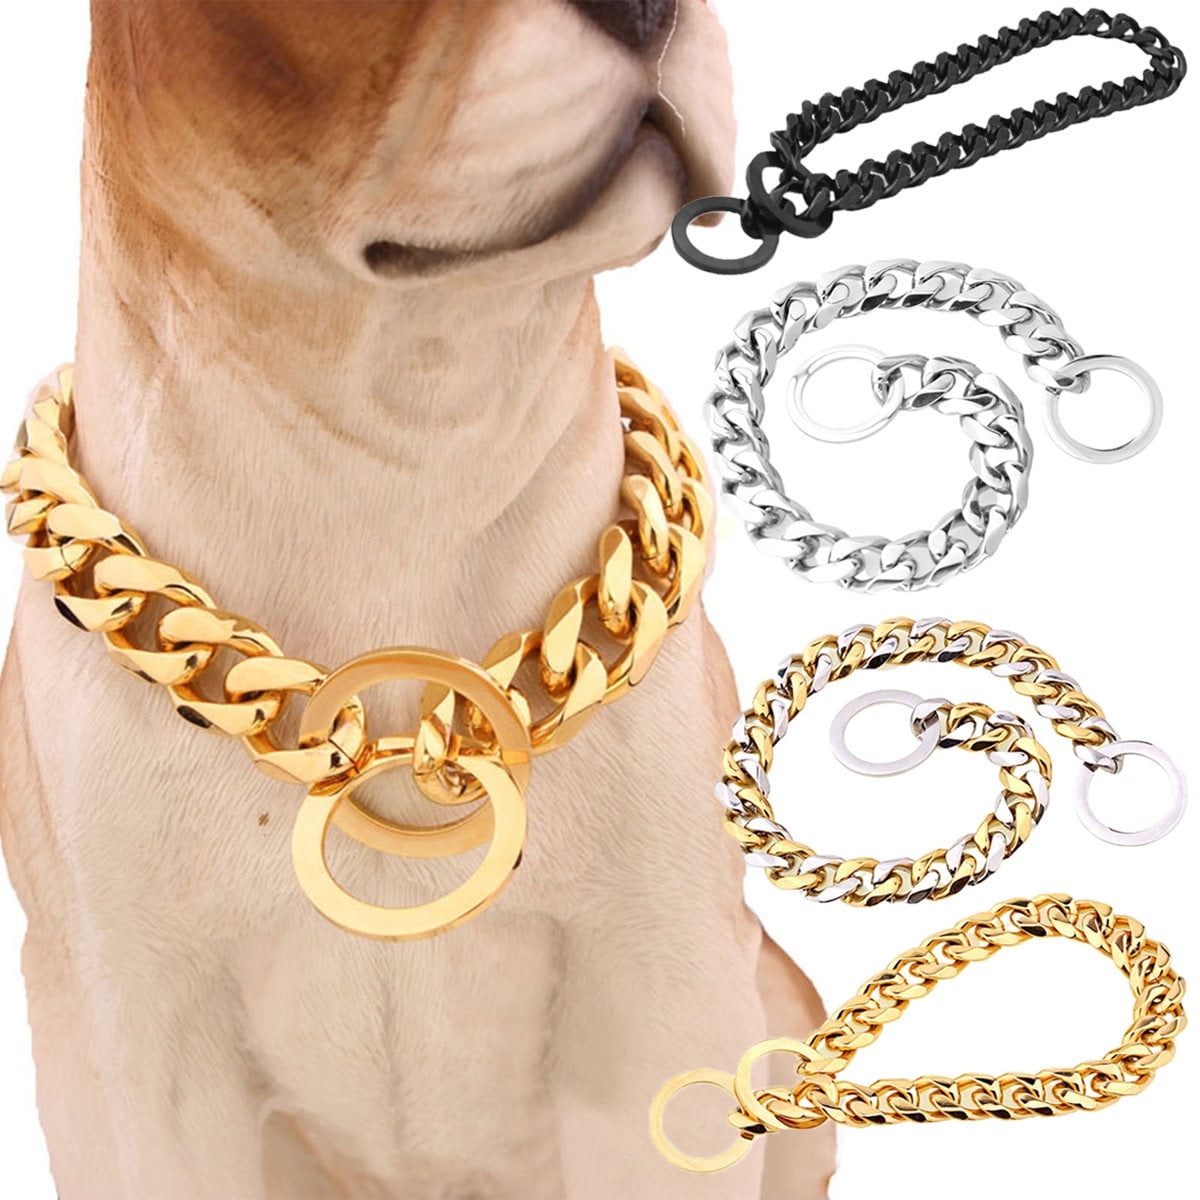 12K Gold filled rhinestone choker dog collar necklace - Ruby Lane